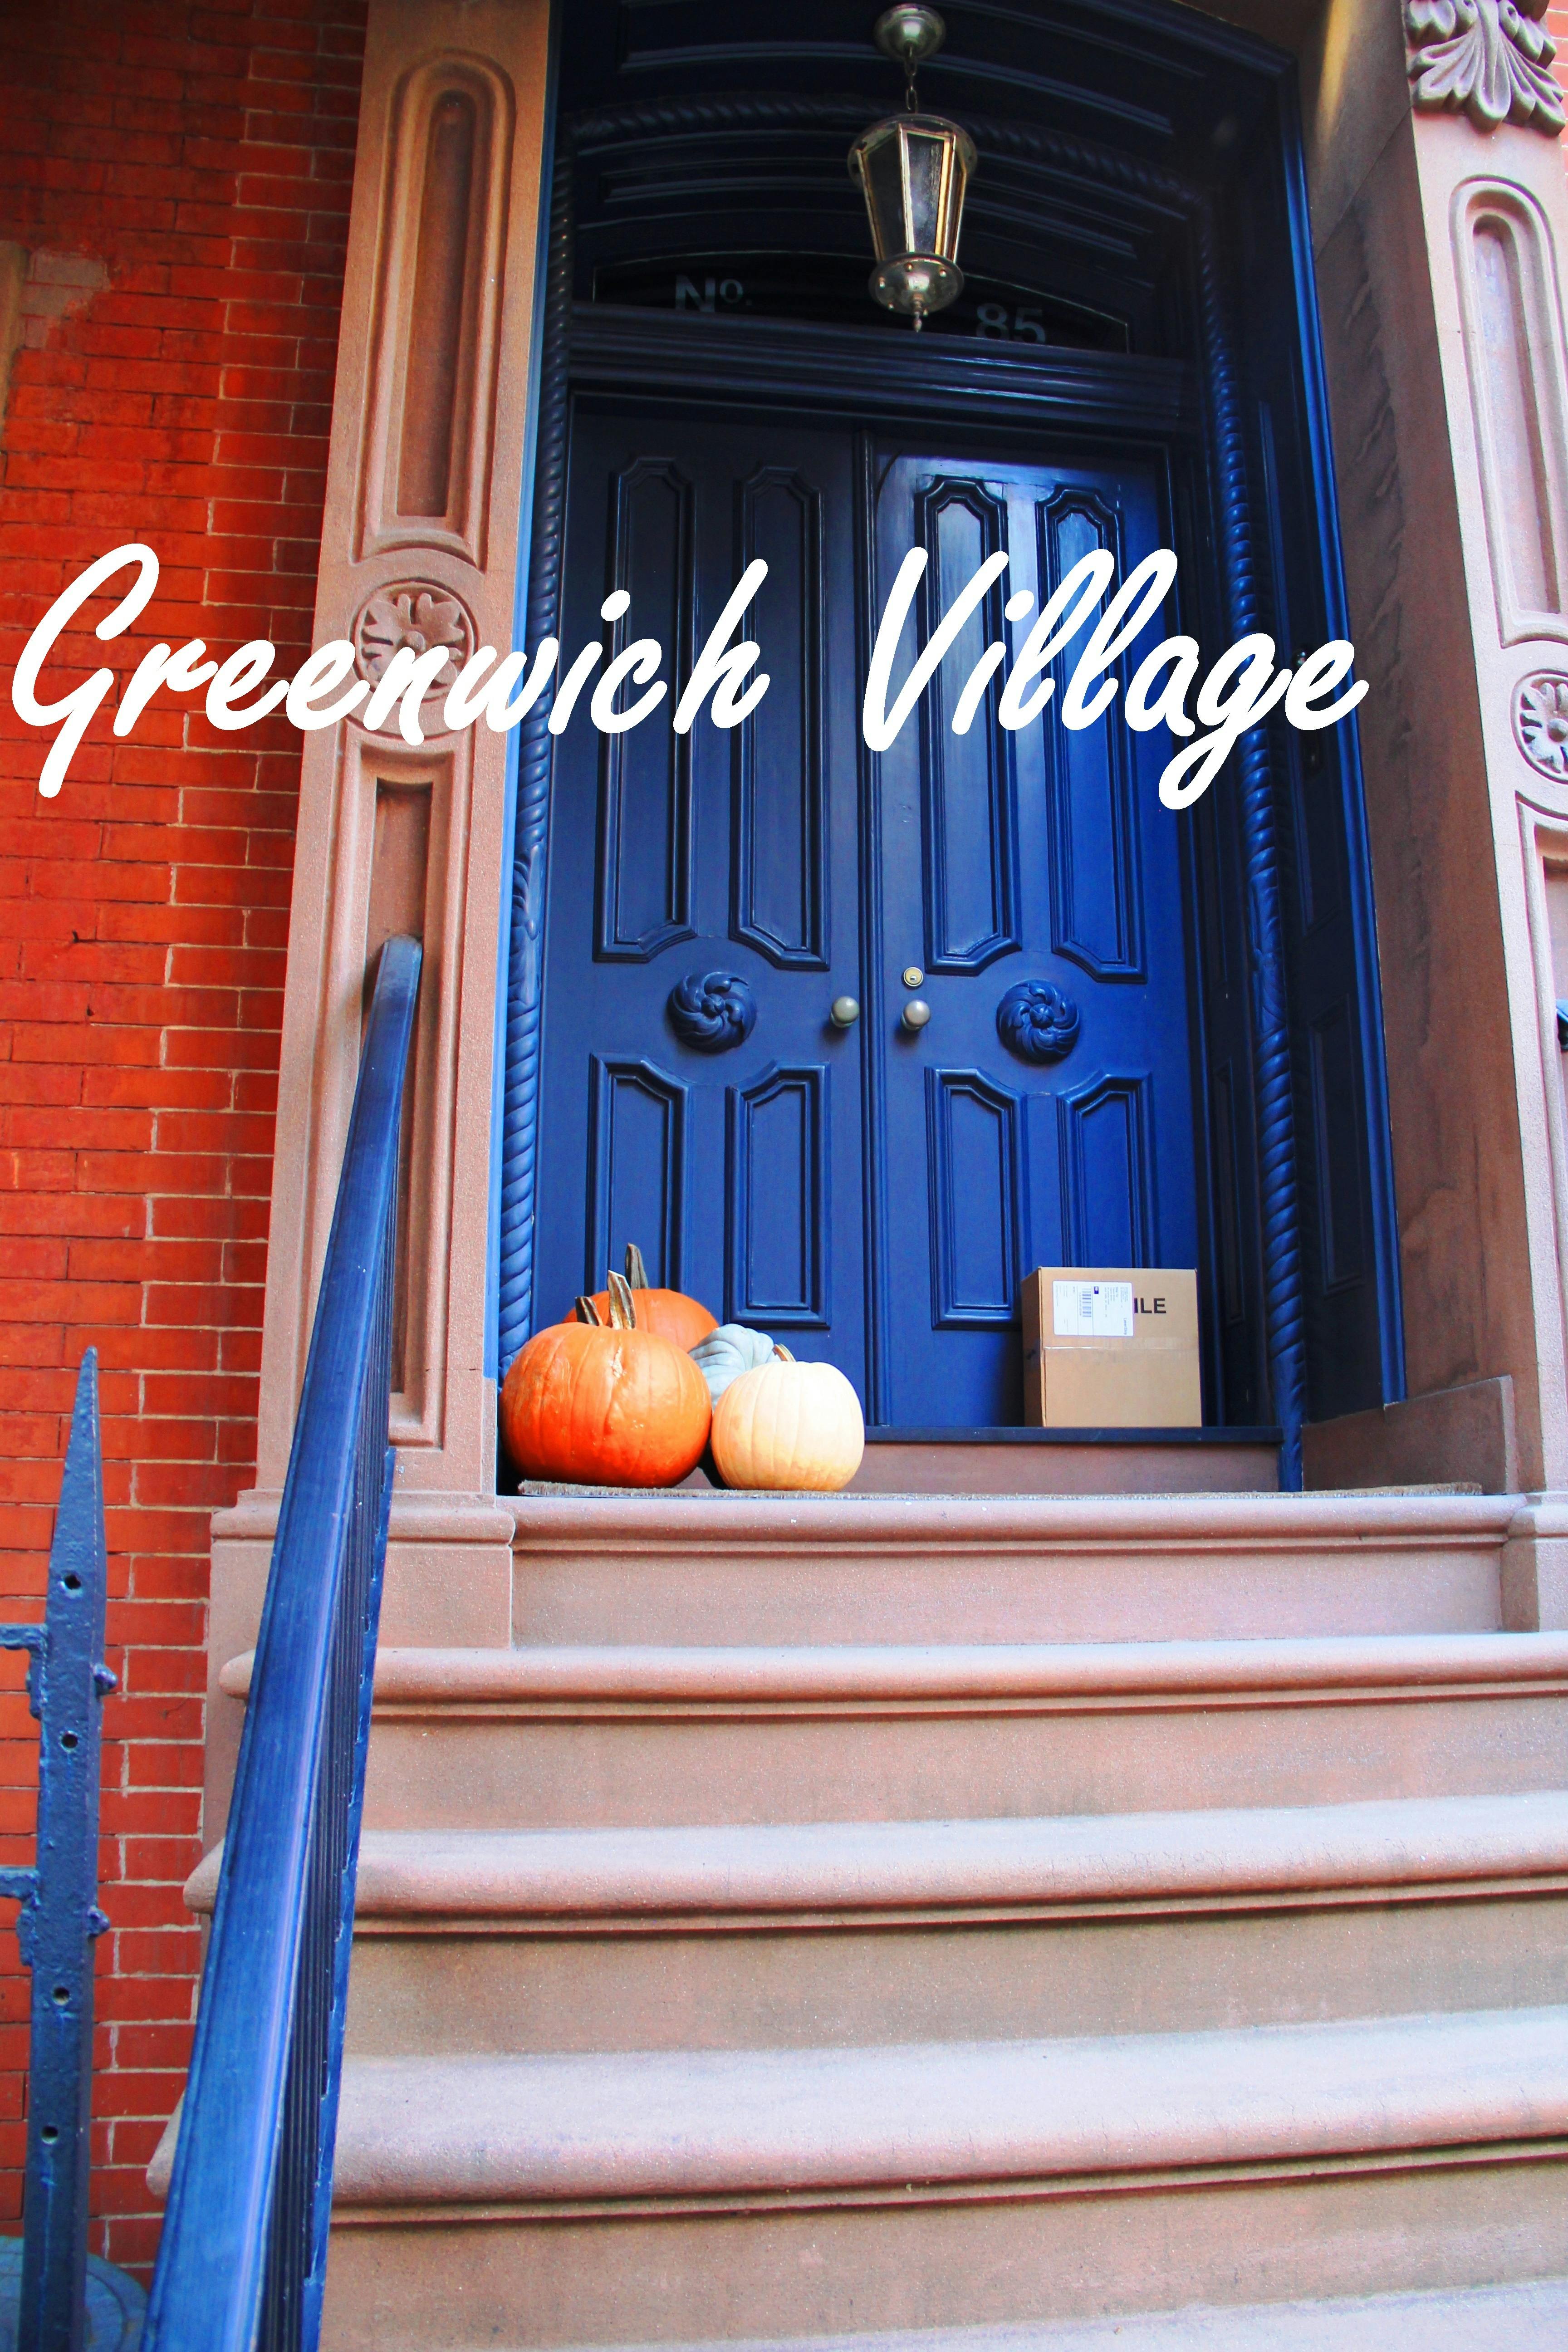 Free stock photo of greenwich village